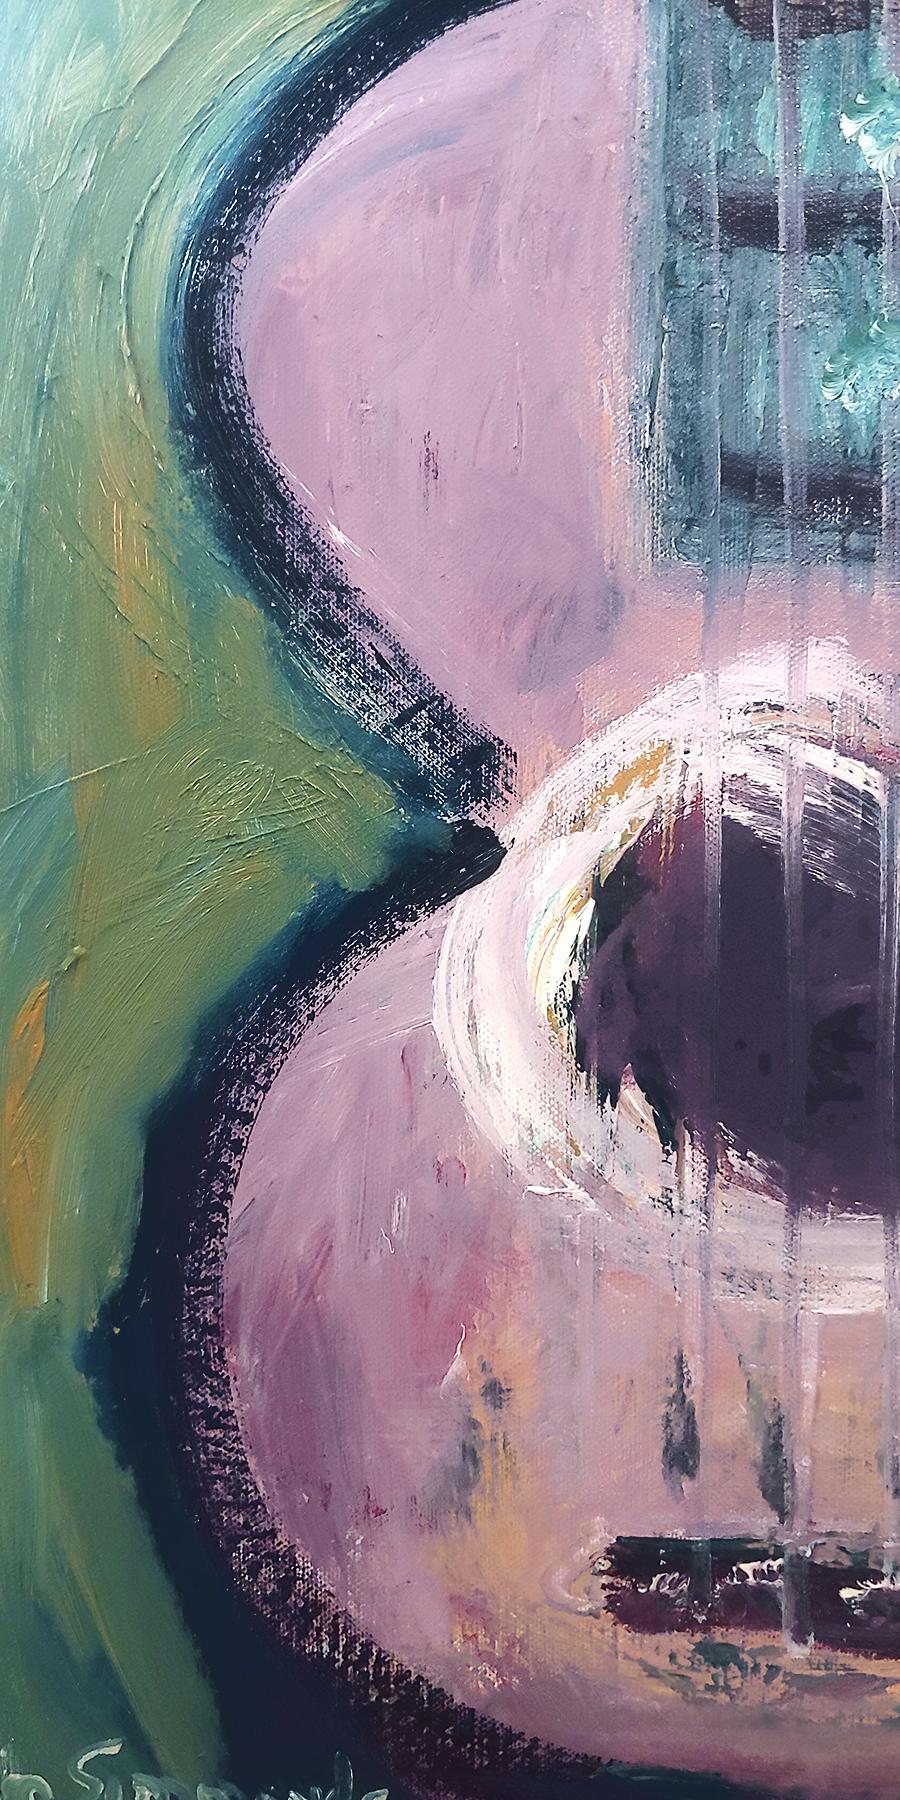 „Harmony in E Flat“ impressionistisch 26x20 Leinwand – Painting von Kim Simmonds